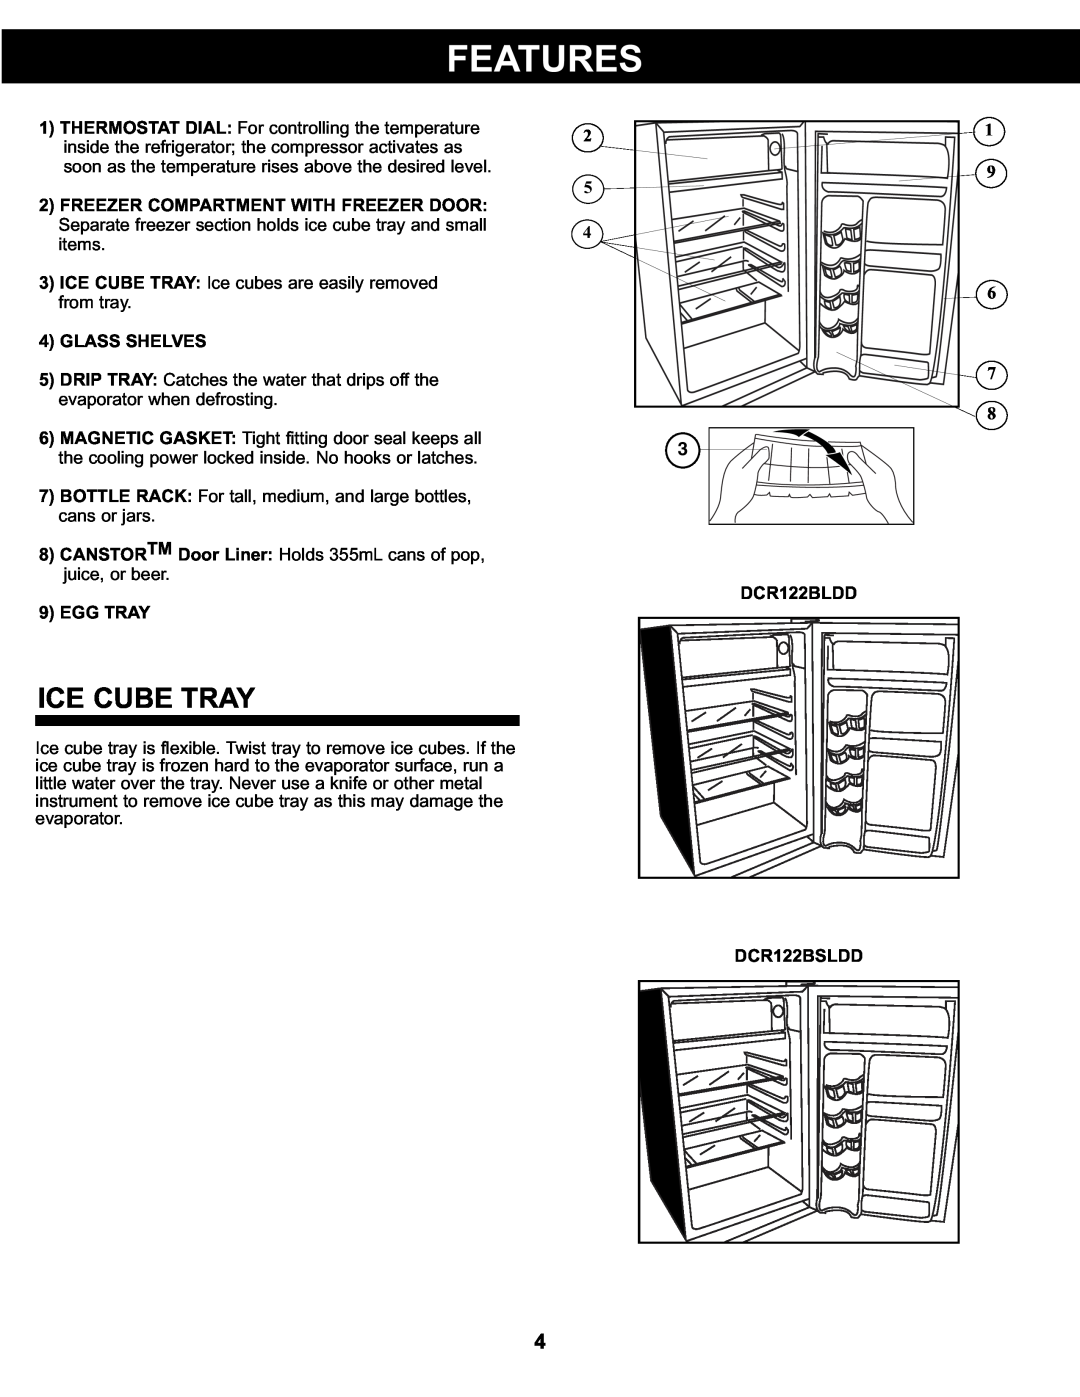 Danby DCR122BLDD manual Features, Ice Cube Tray, 4GLASS SHELVES, 9EGG TRAY, DCR122BSLDD 